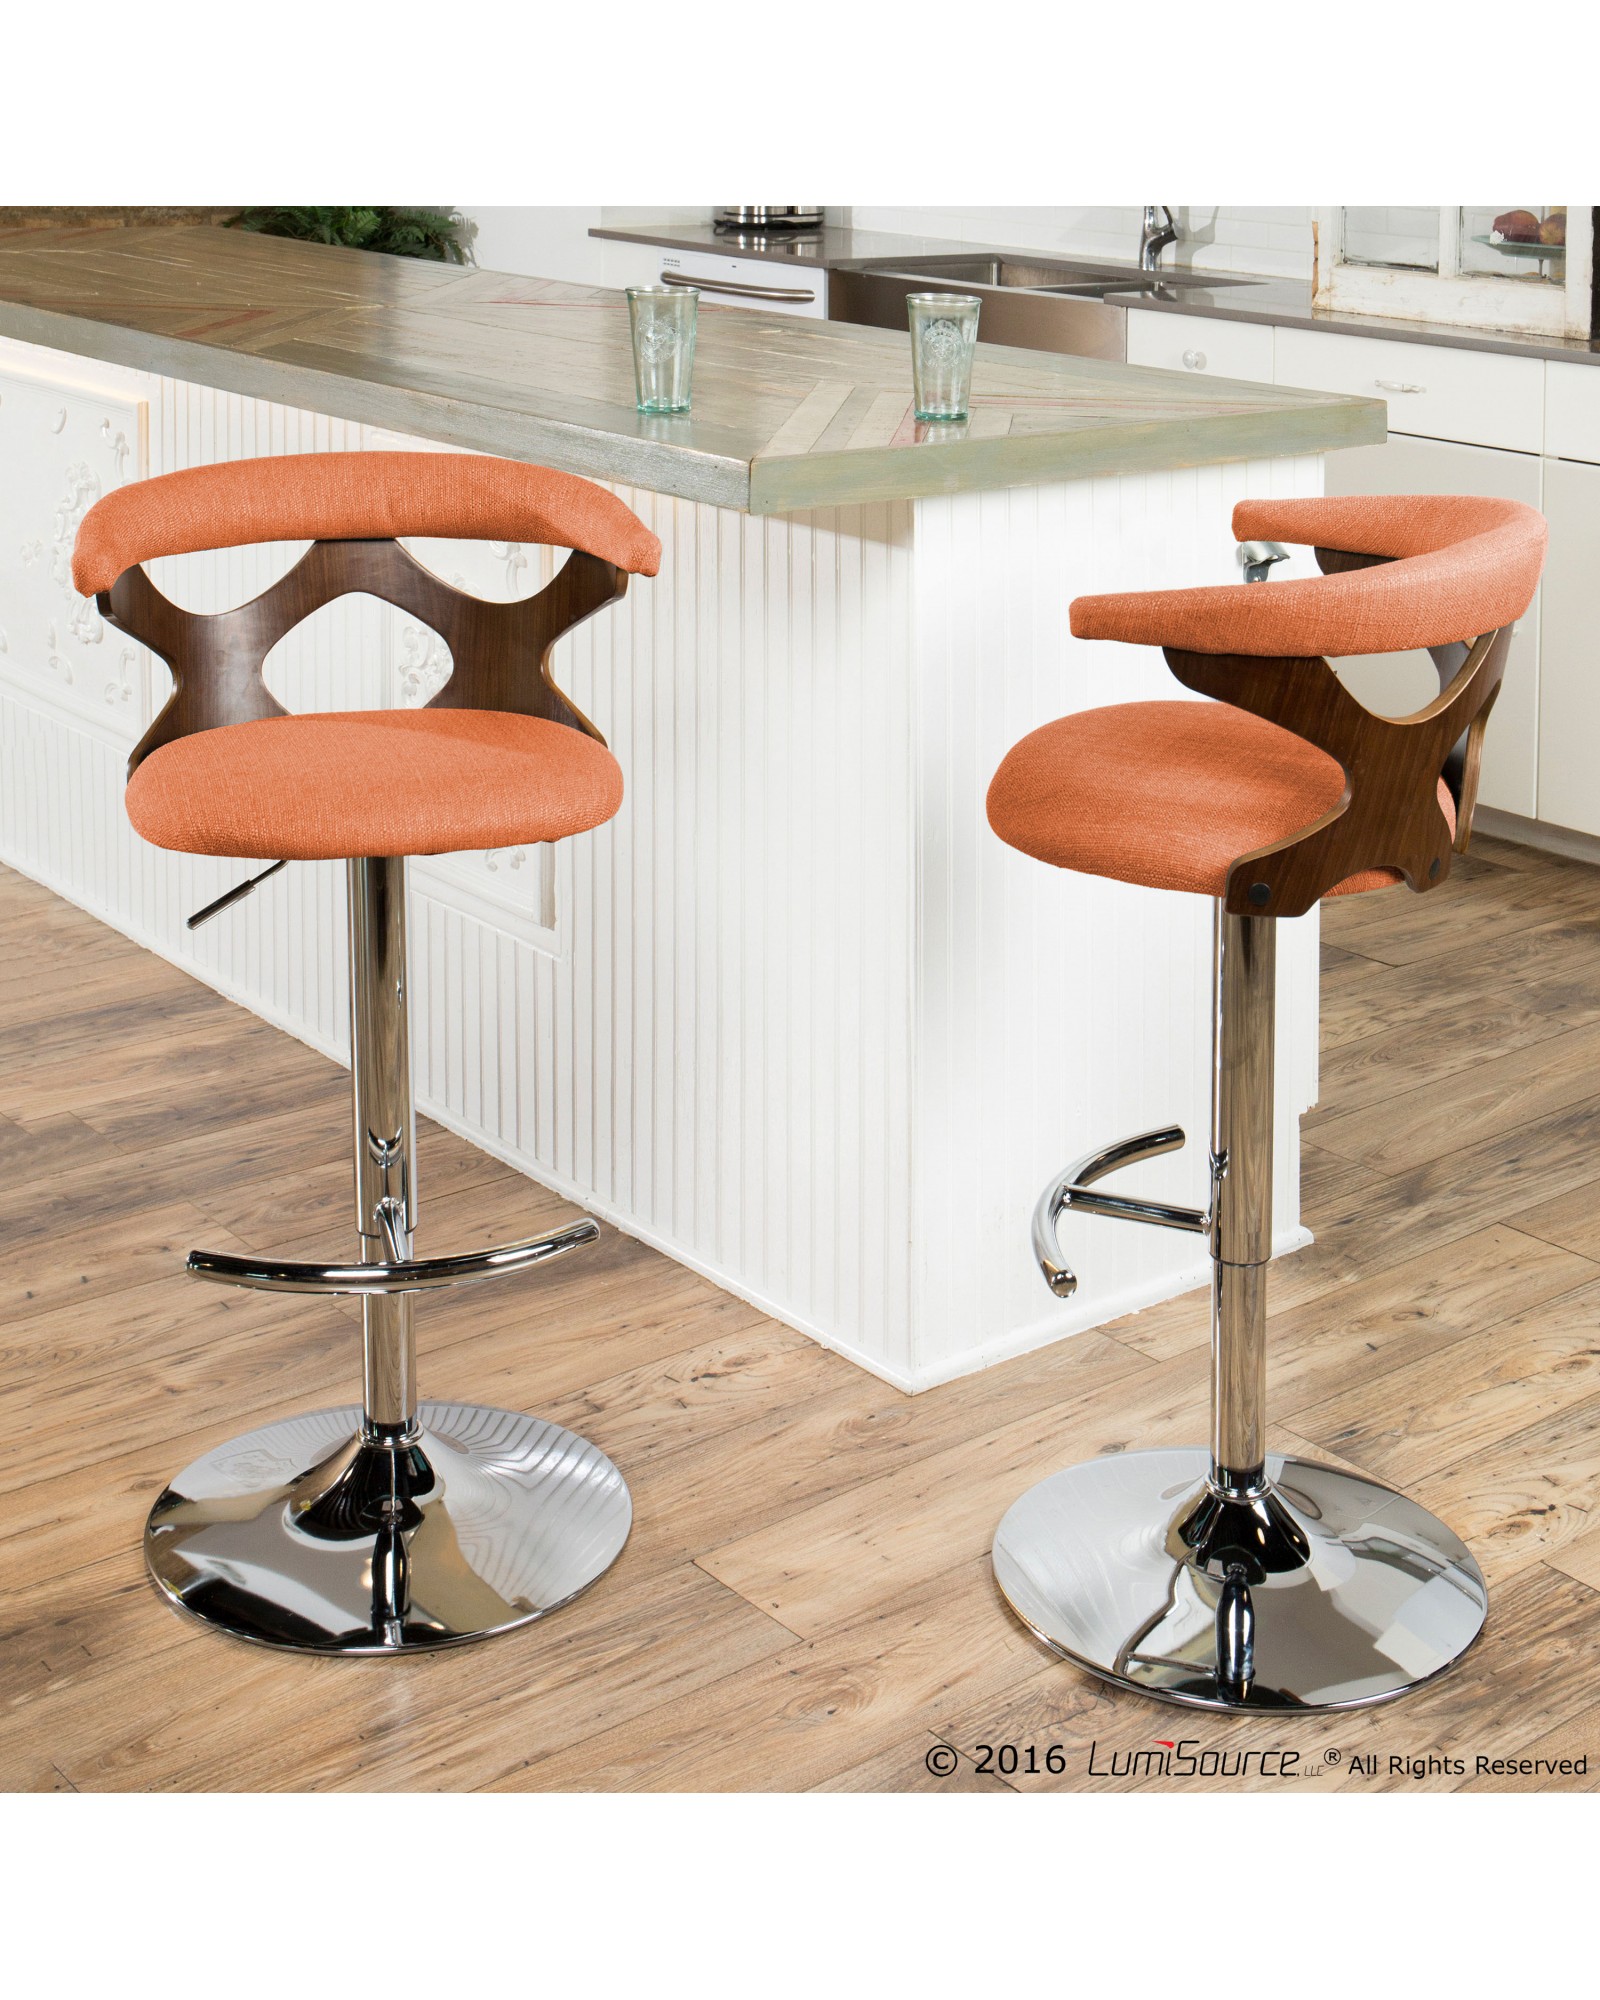 Gardenia Mid-Century Modern Adjustable Barstool with Swivel in Walnut and Orange